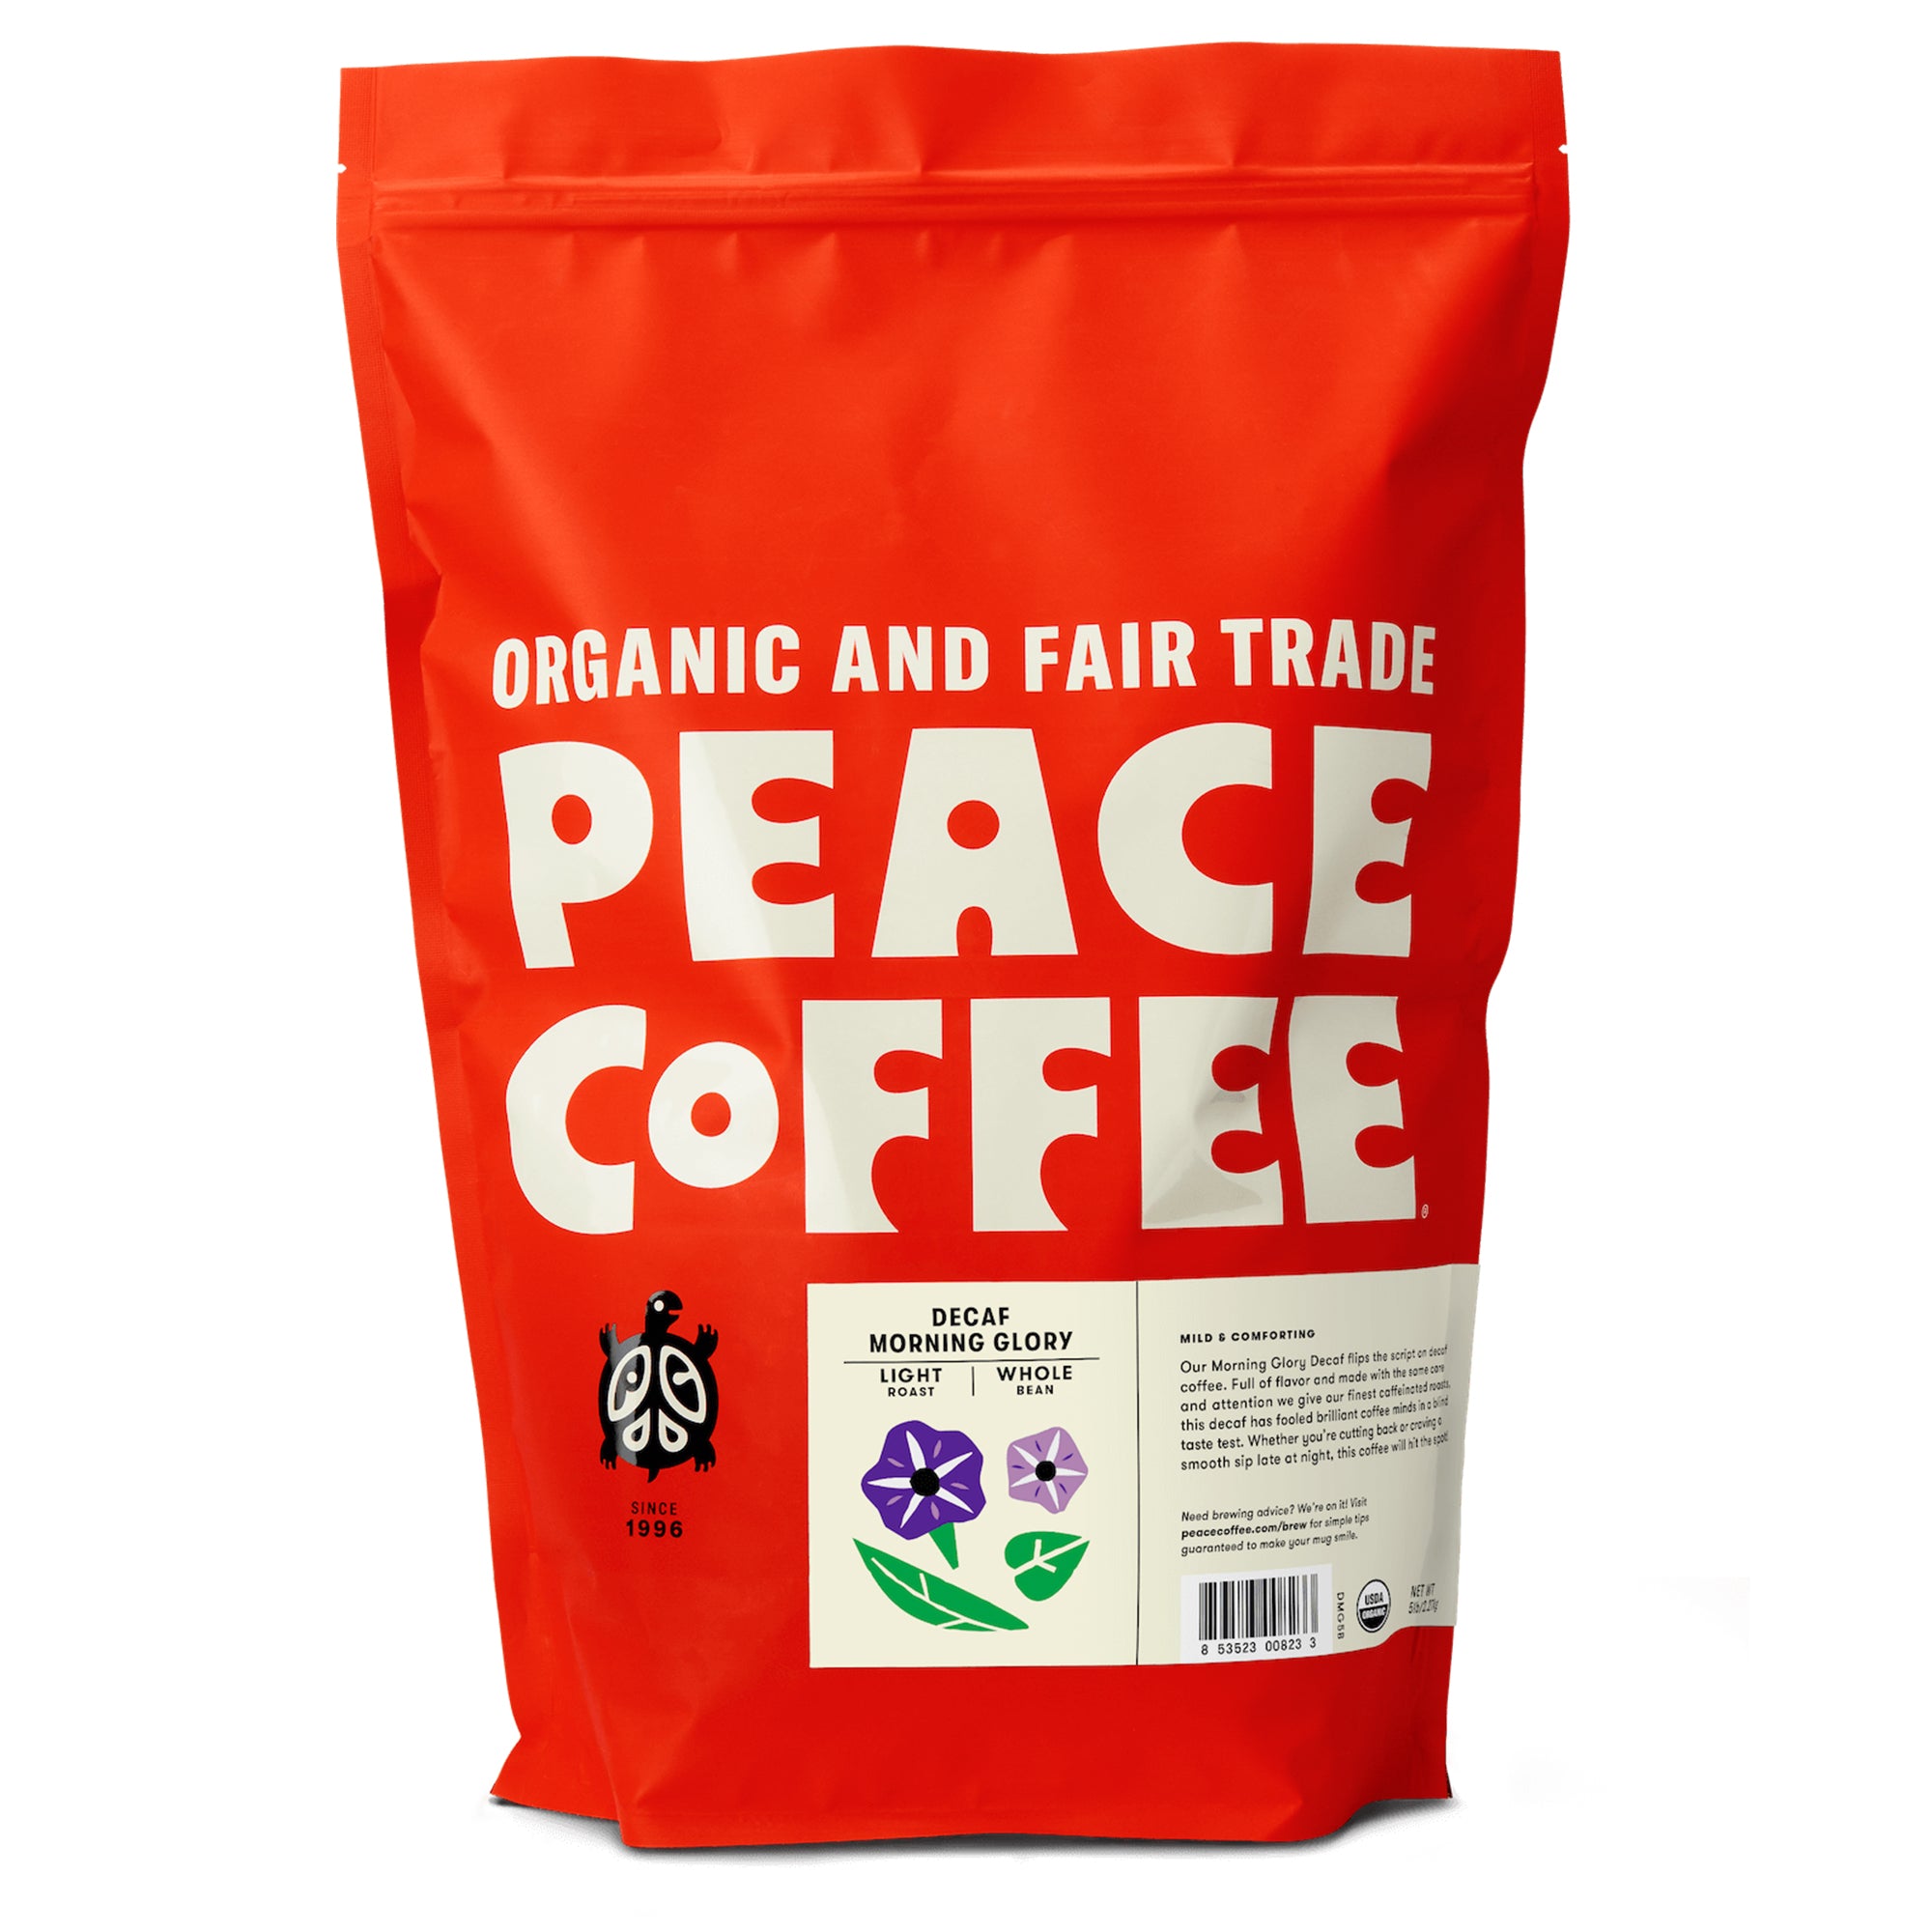 Peace Coffee Decaf Morning Glory Coffee - Whole Bean